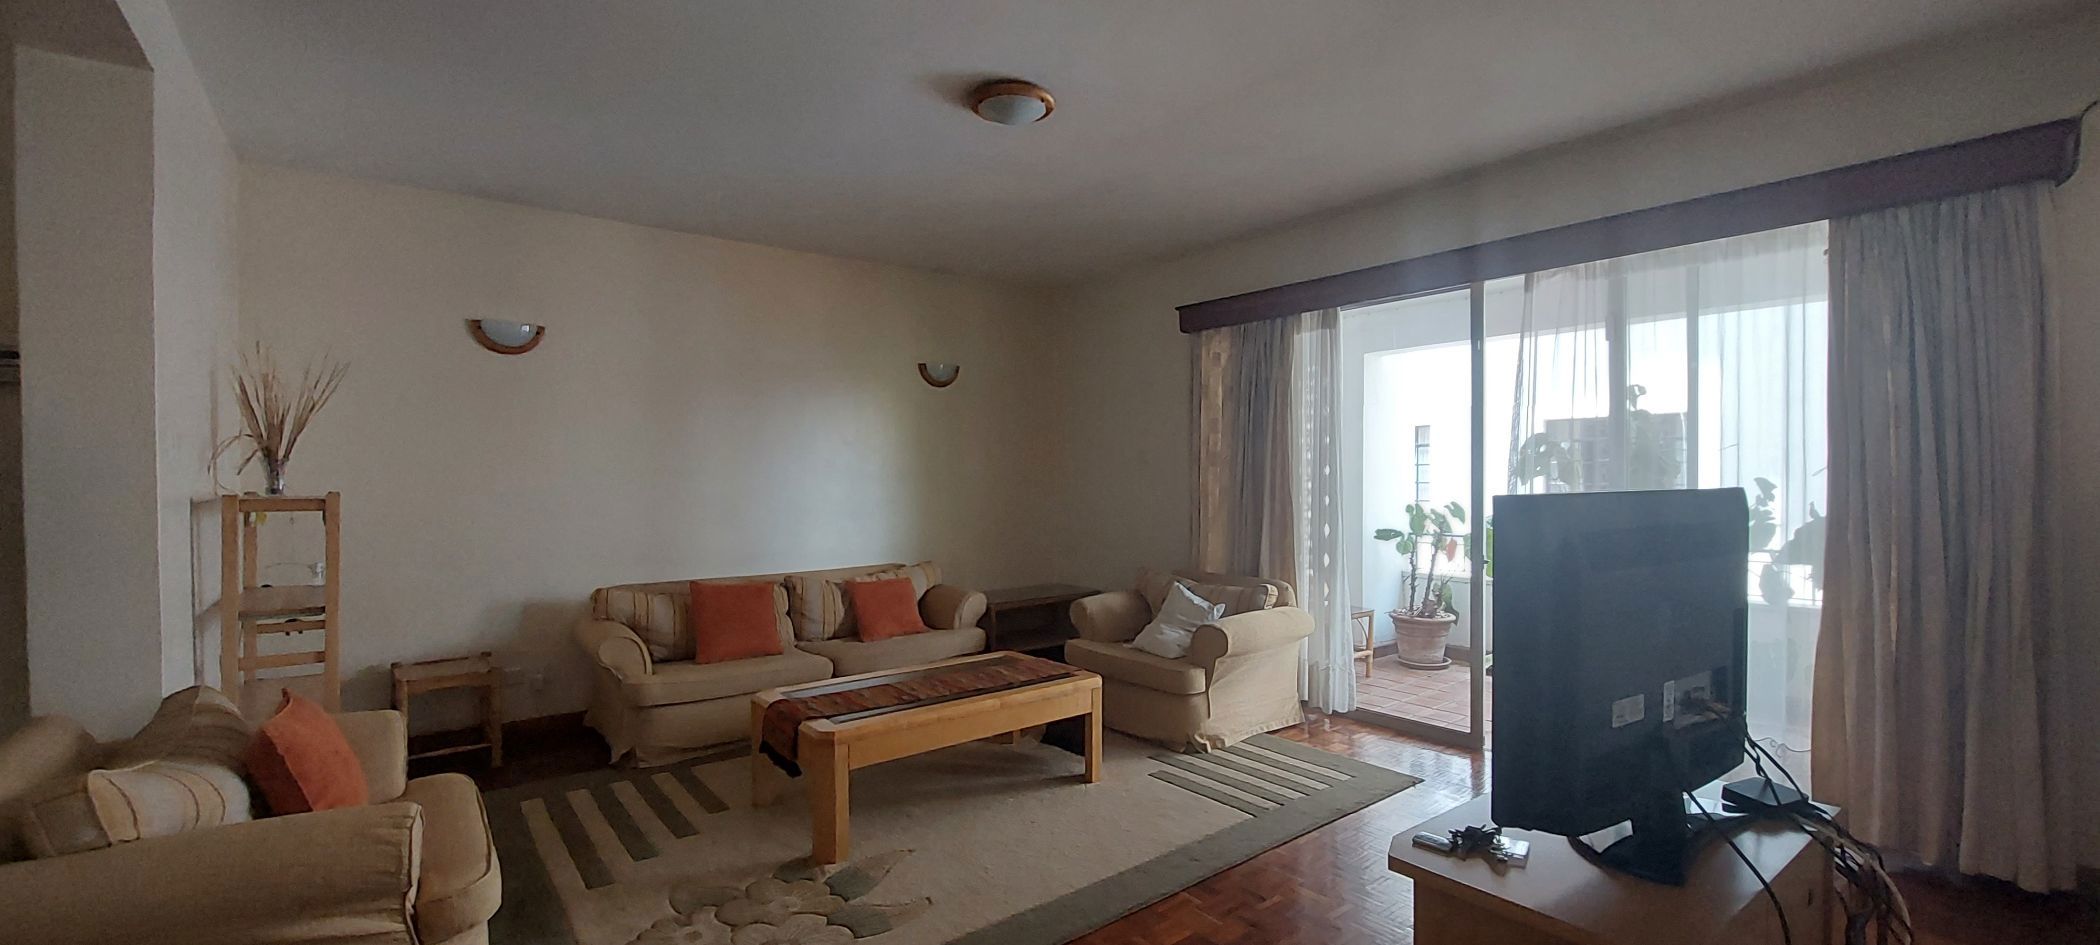 3 bedroom apartment to rent in Kilimani (Kenya)